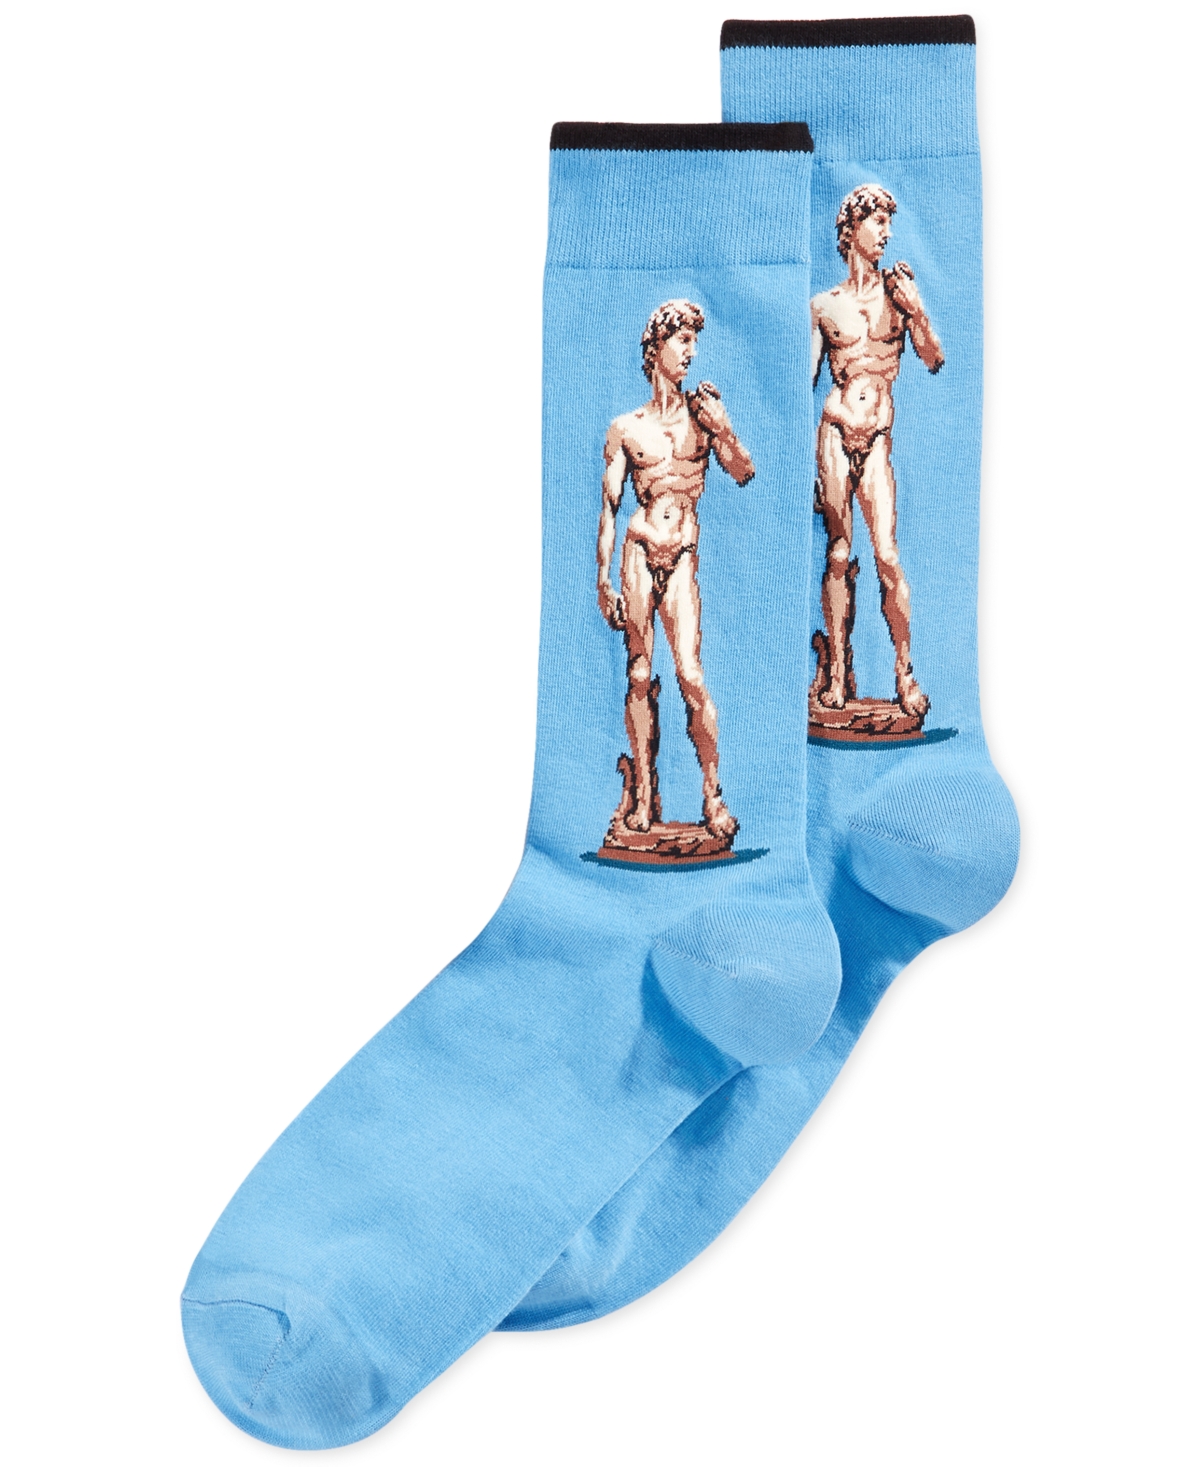 Hot Sox Men's Socks, David